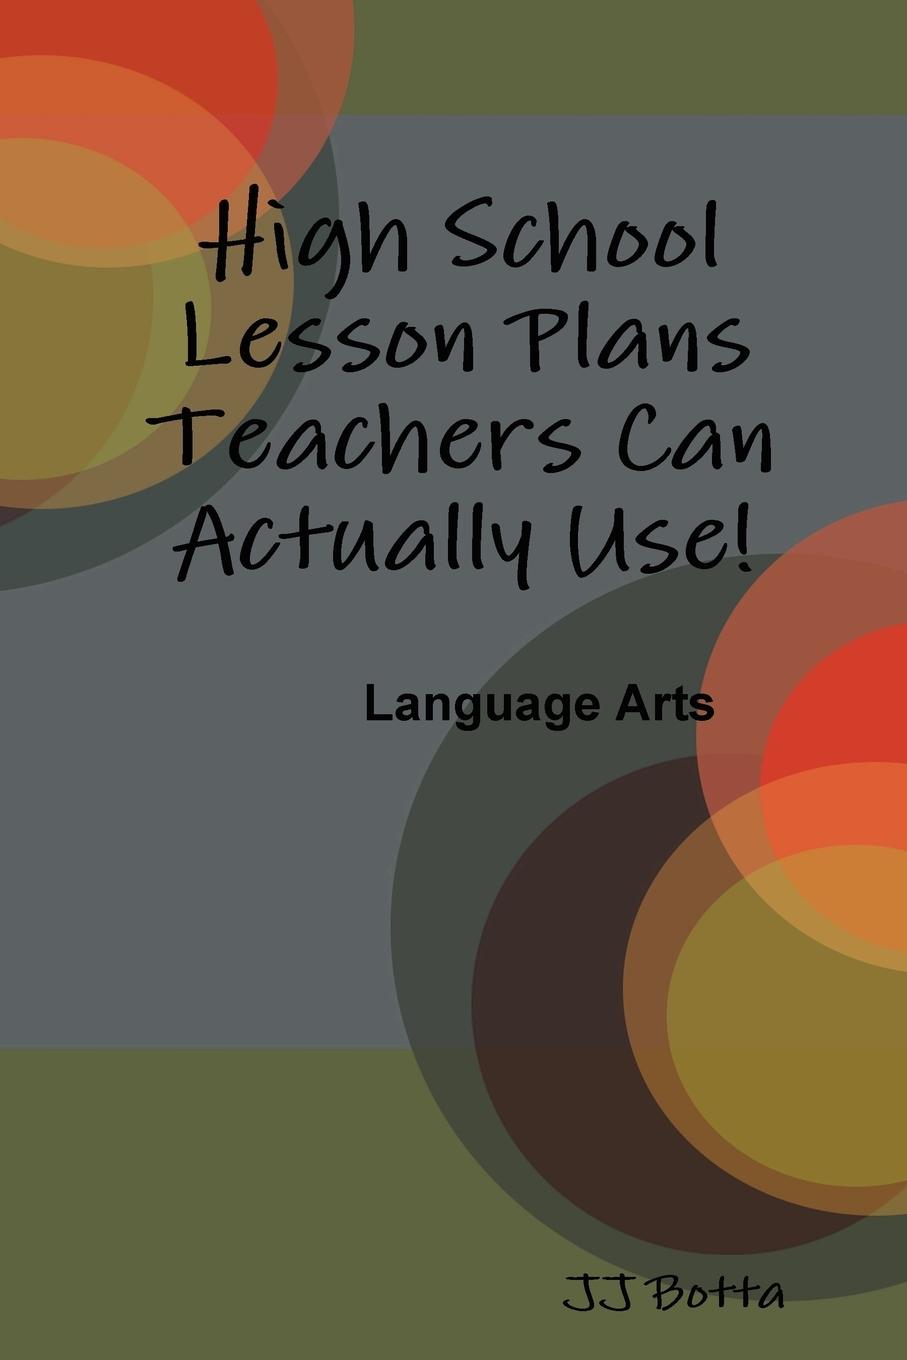 High School Lesson Plans Teachers Can Actually Use! - Botta, Jj